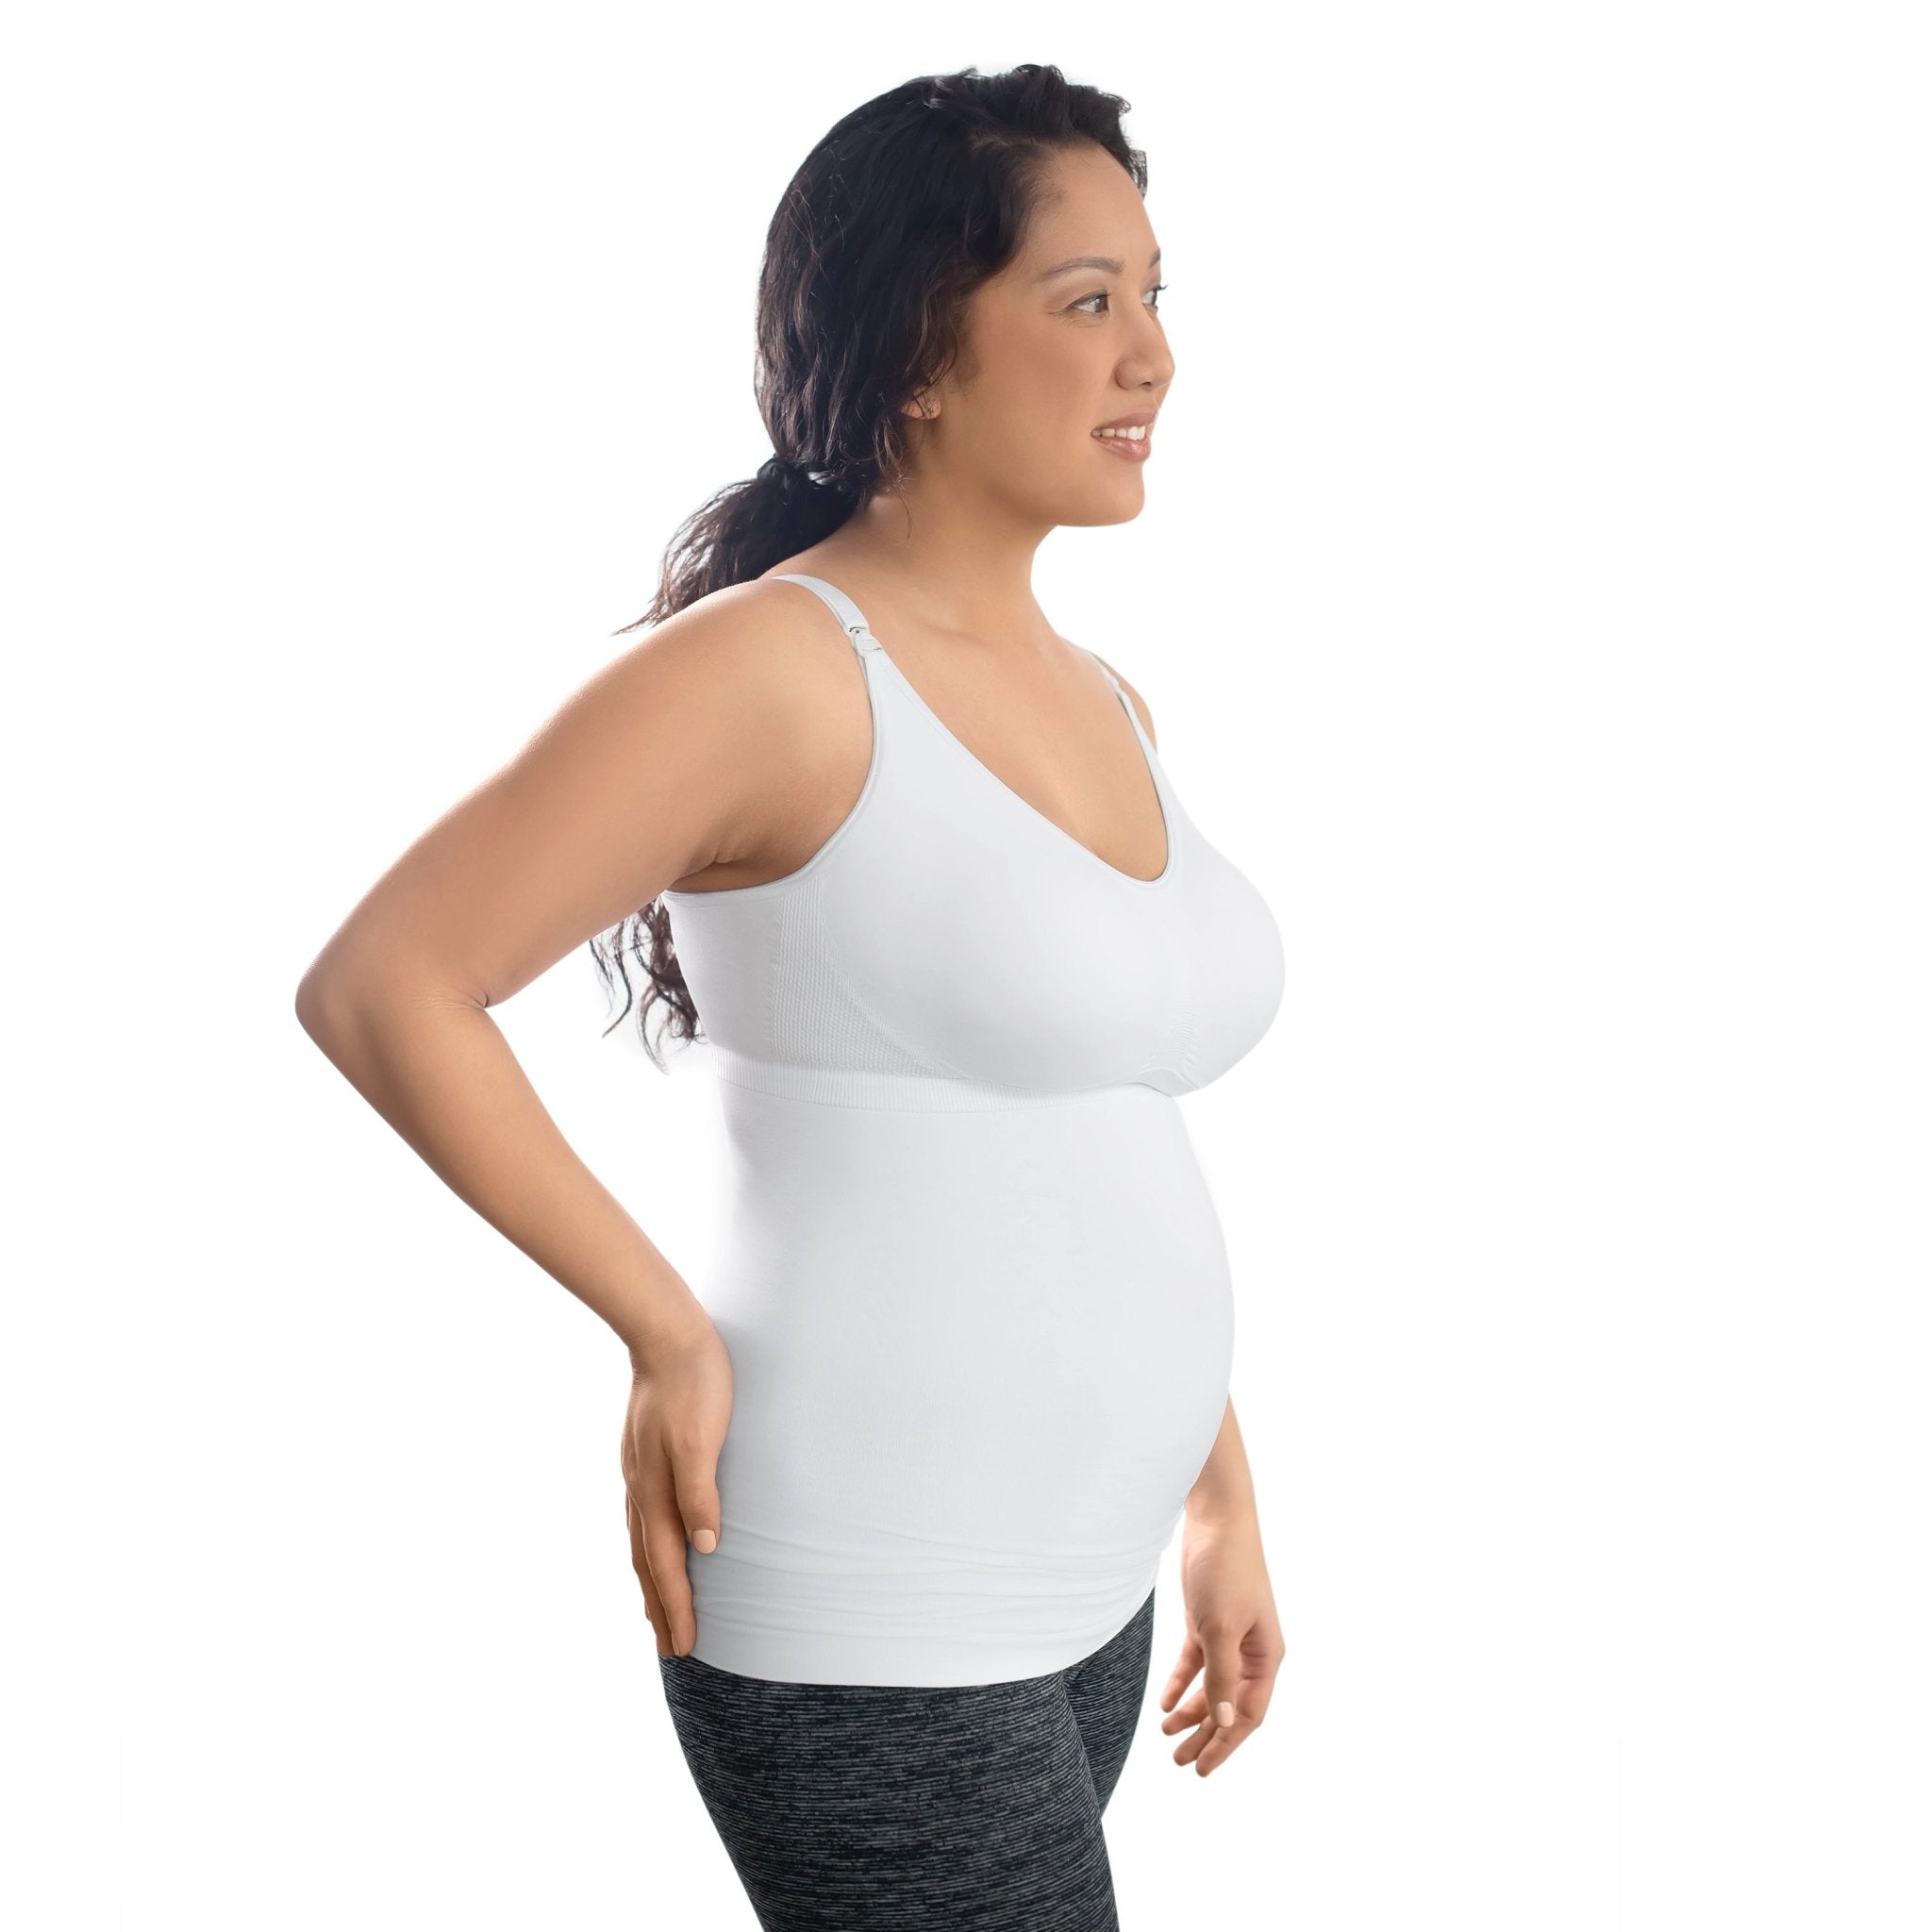 Medela Maternity & Nursing Comfy Camisole - Large / White